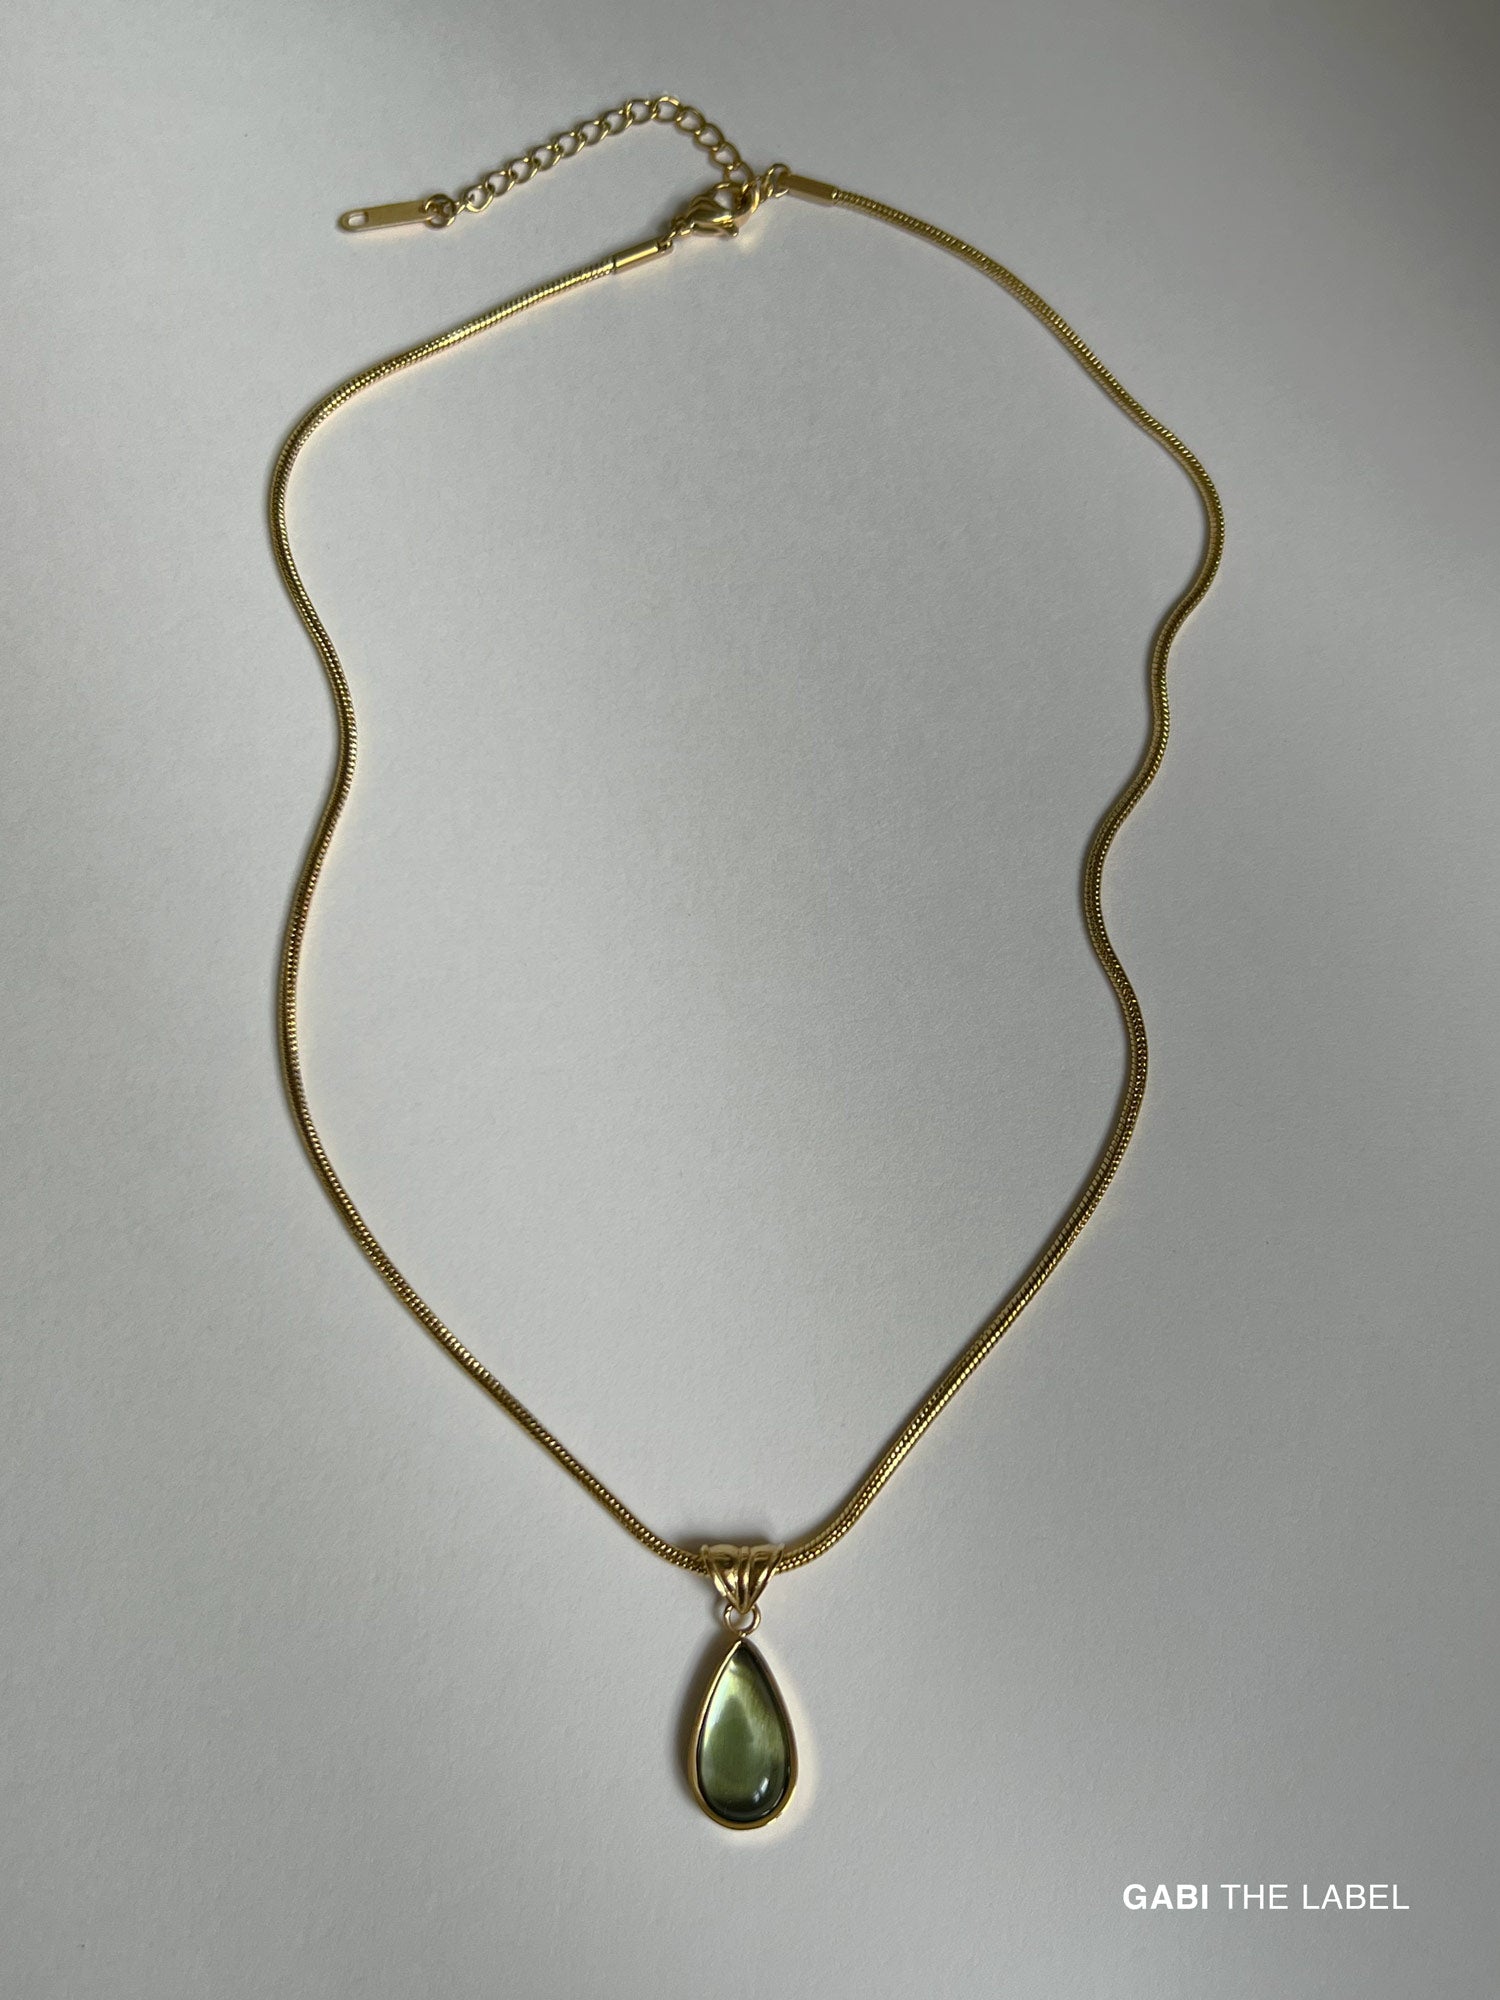 Collier en or en forme de larme de sirène - Vert